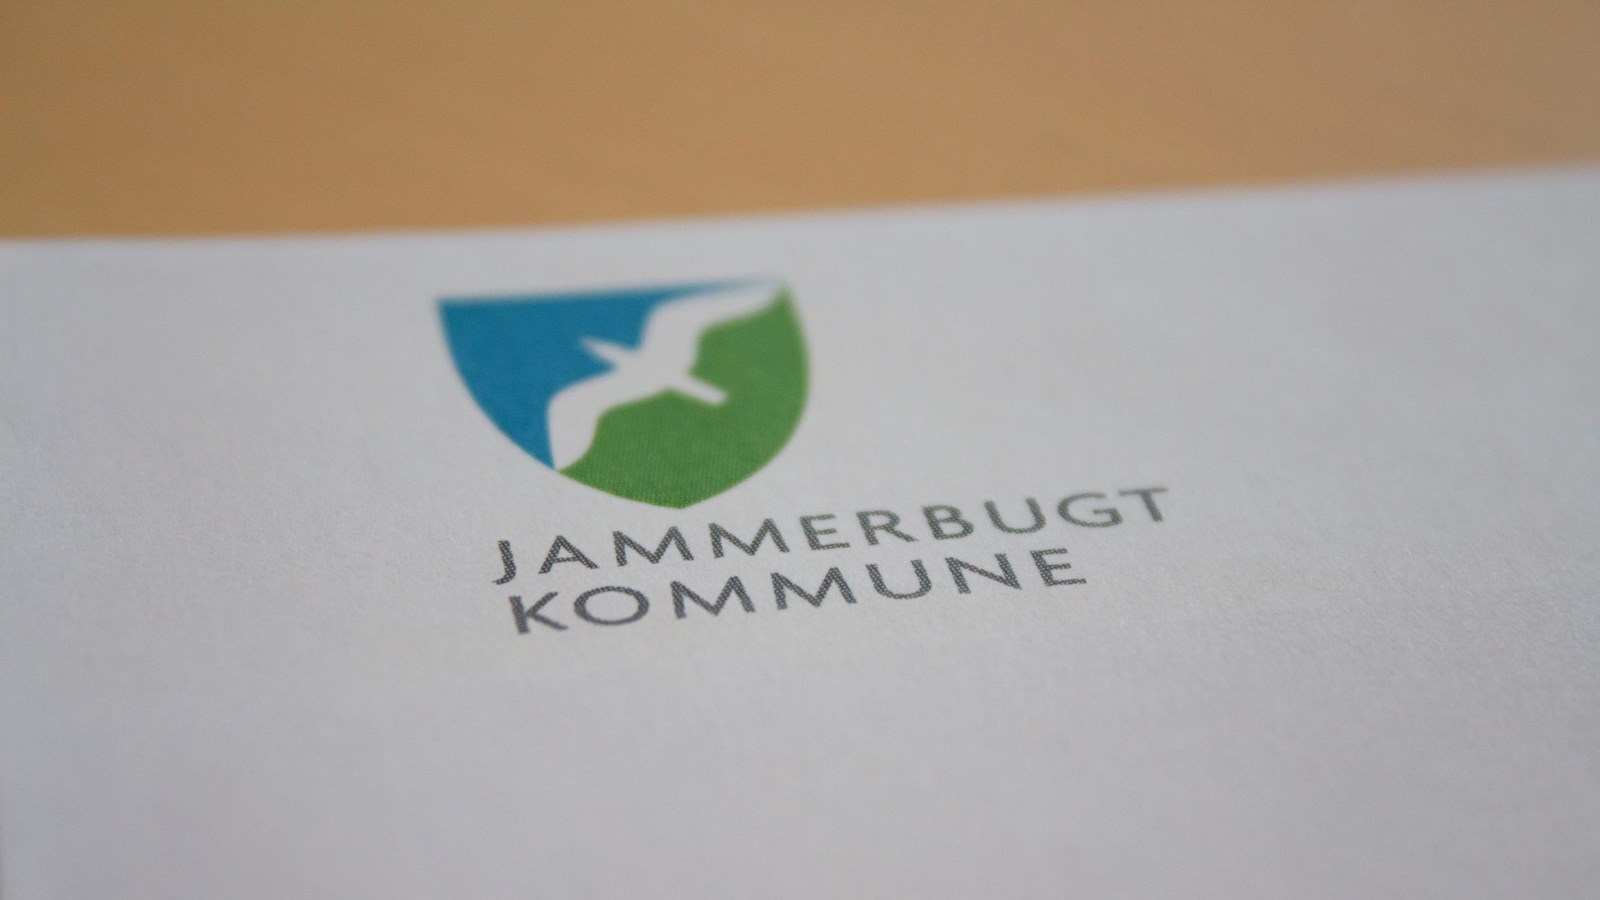 Logo Jammerbugt Kommune på papir